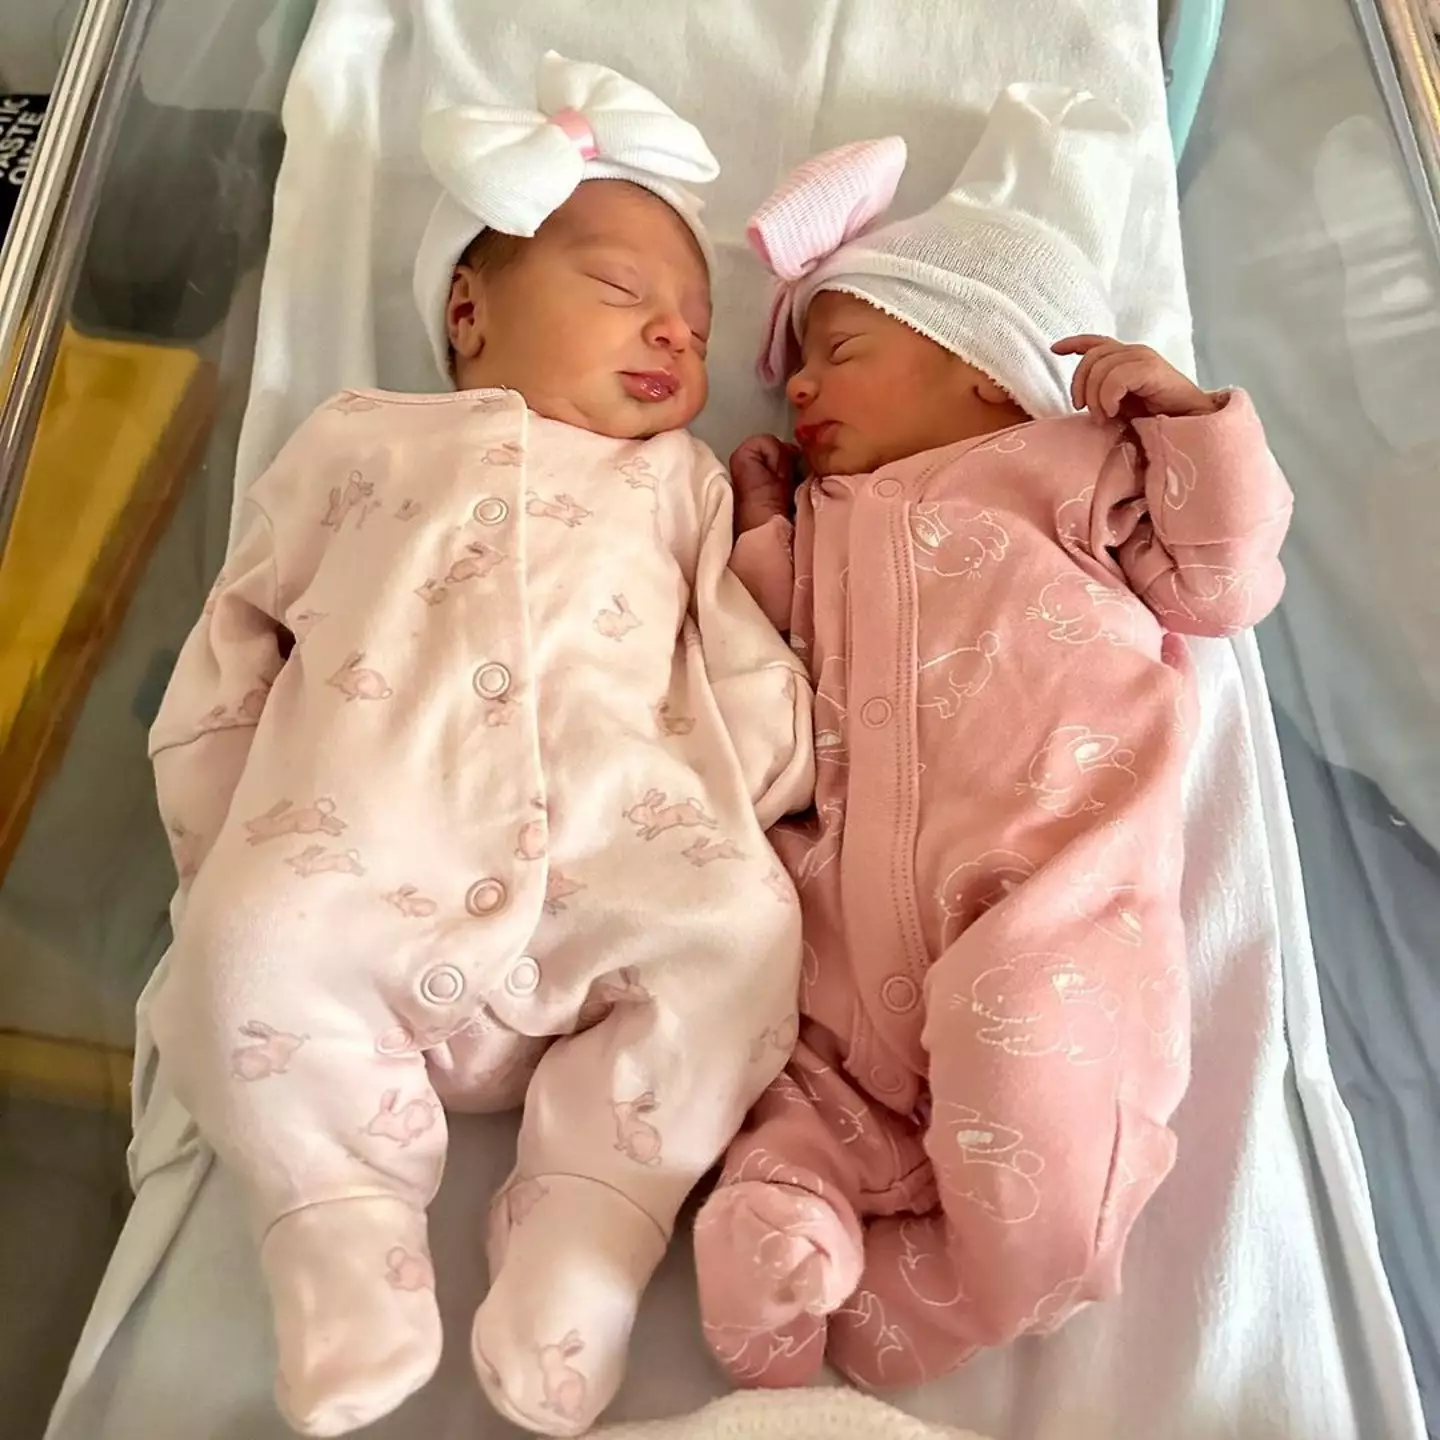 The former Islander welcomed two baby girls last week (22 May).